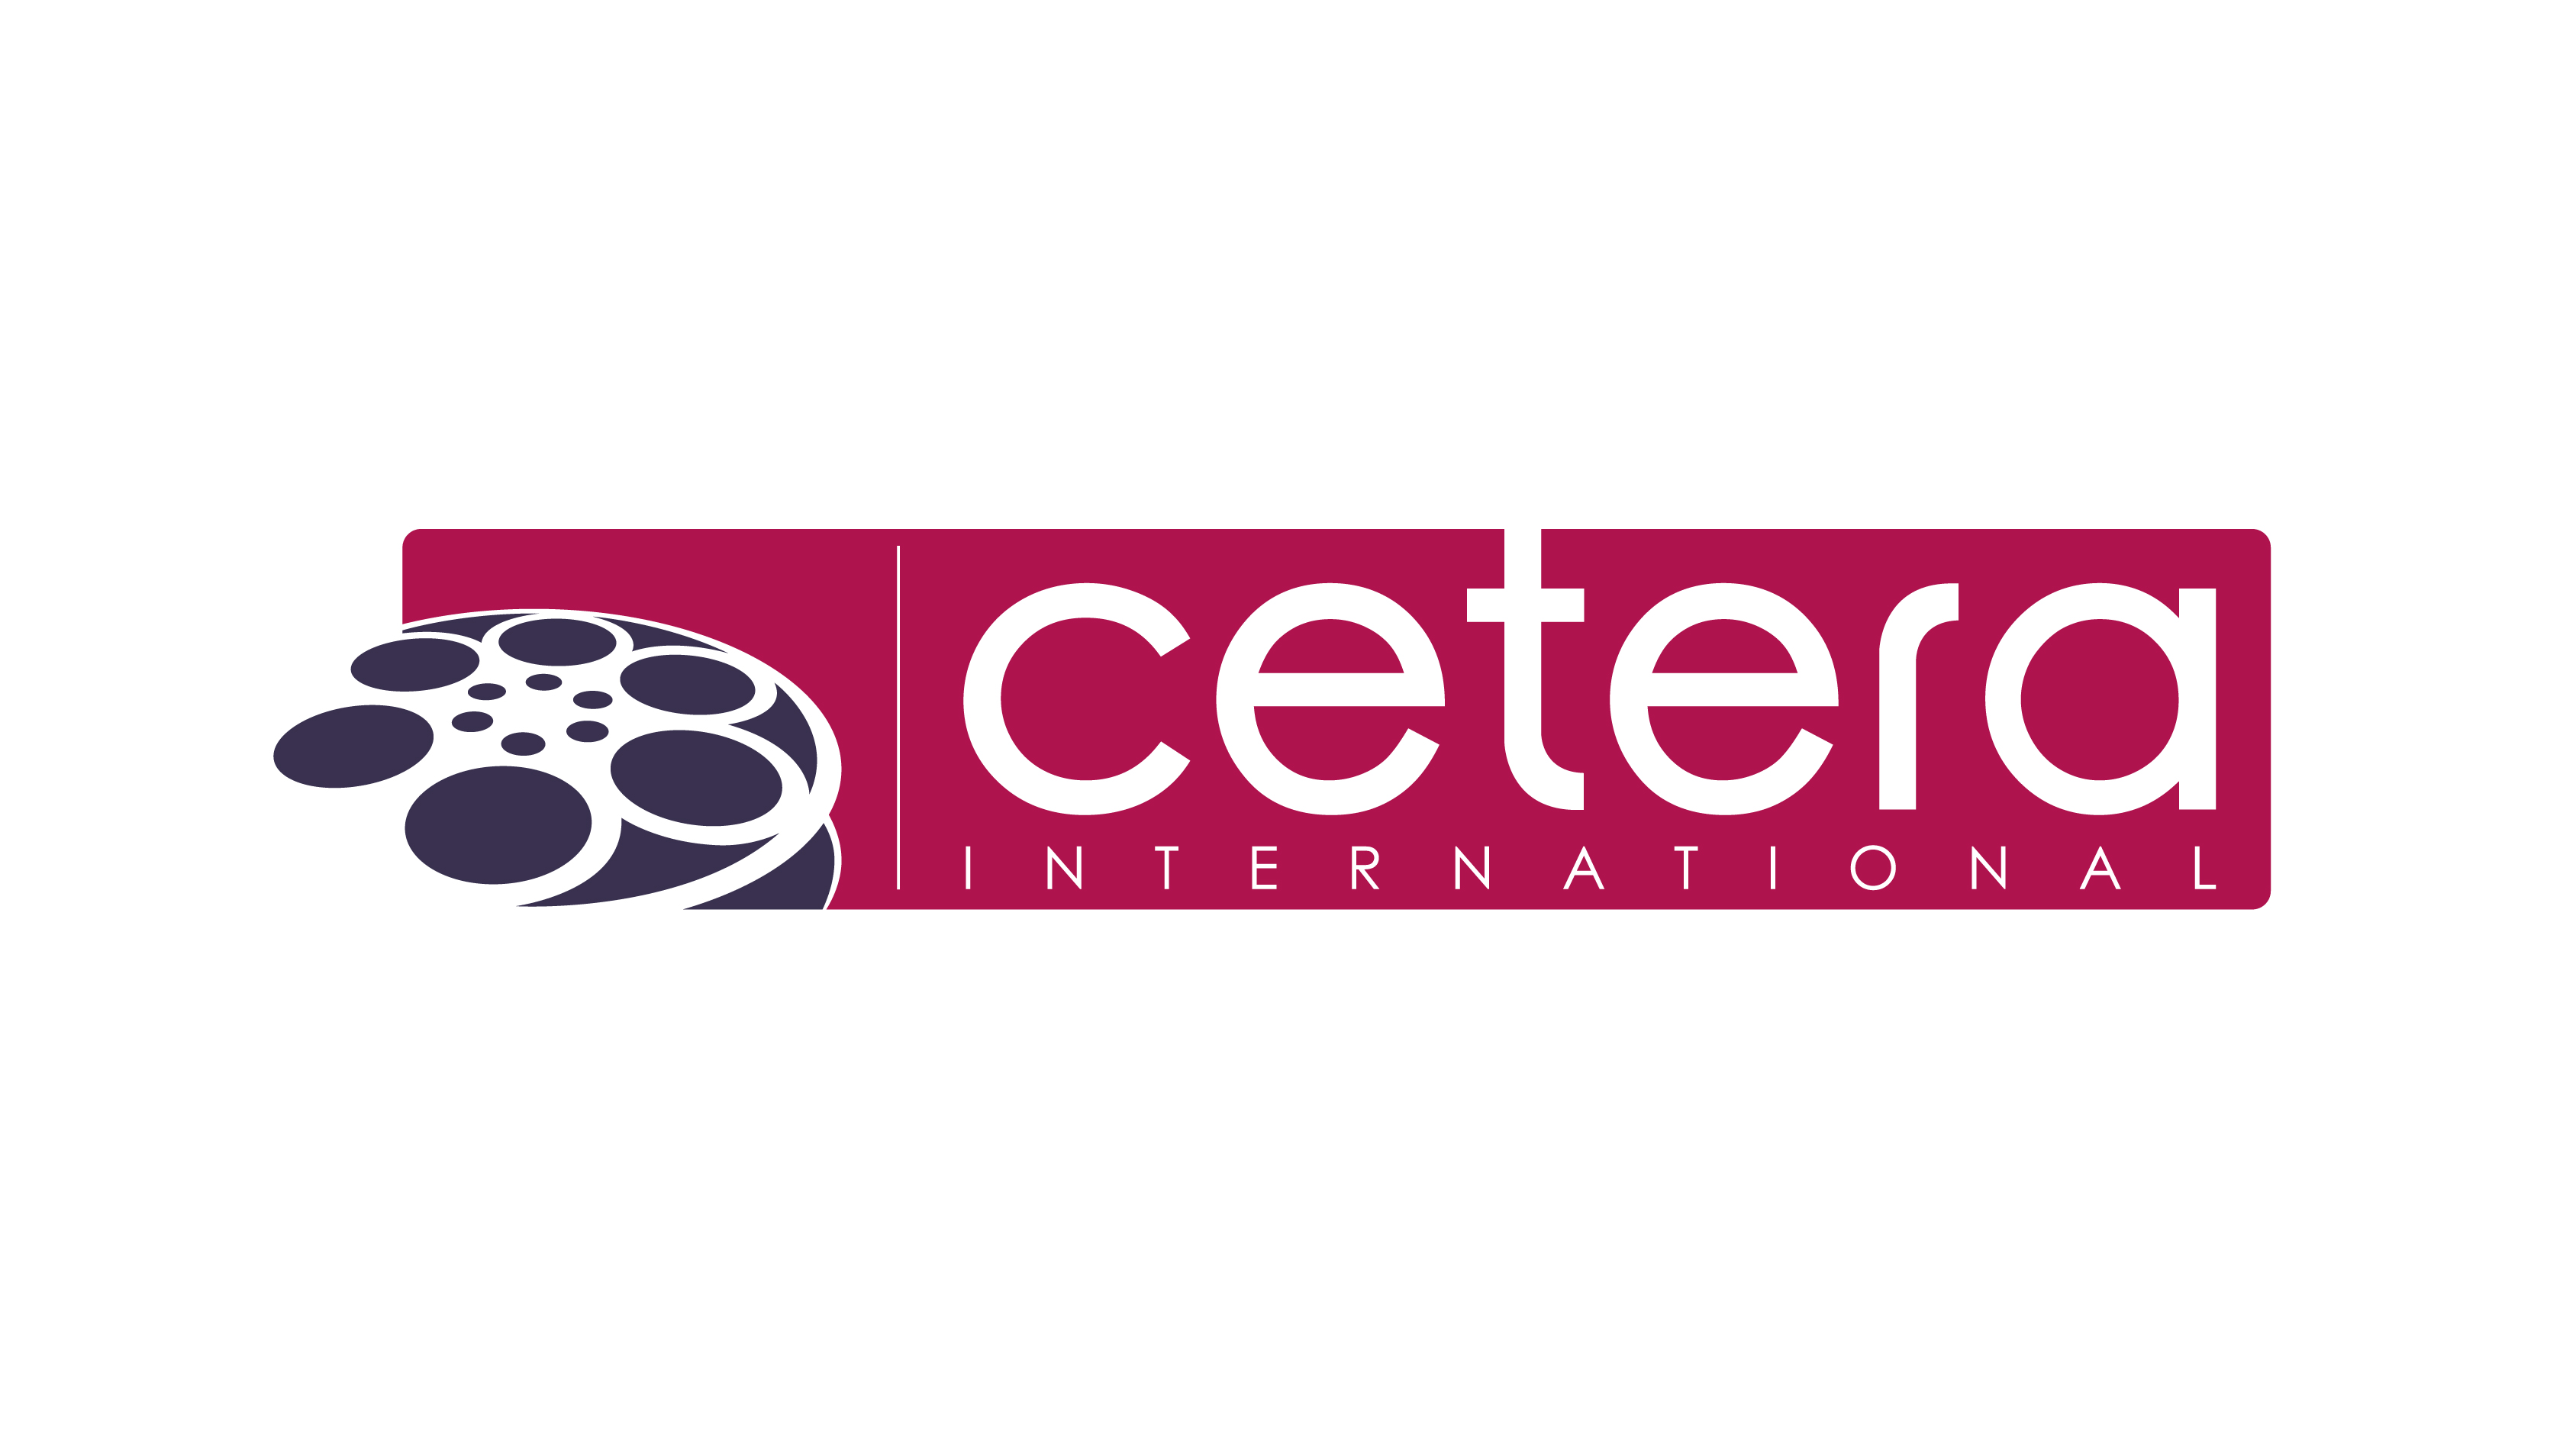 CETERA INTERNATIONAL